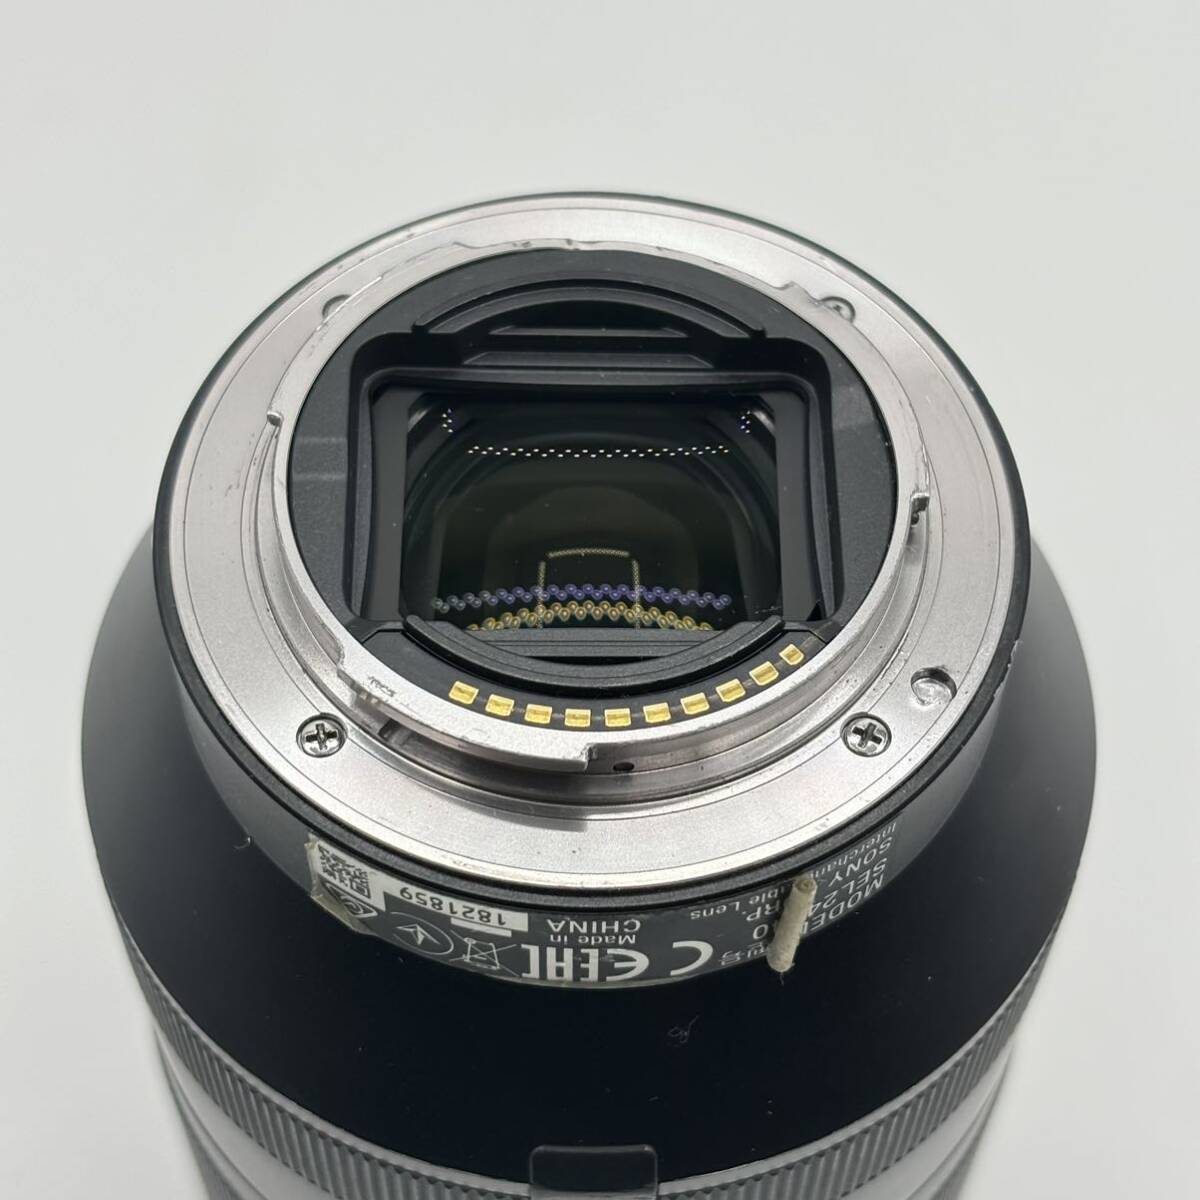  Junk SONY Sony height magnification zoom lens full size FE 24-240mm F3.5-6.3 OSS digital single-lens camera α[E mount ] for SEL24240